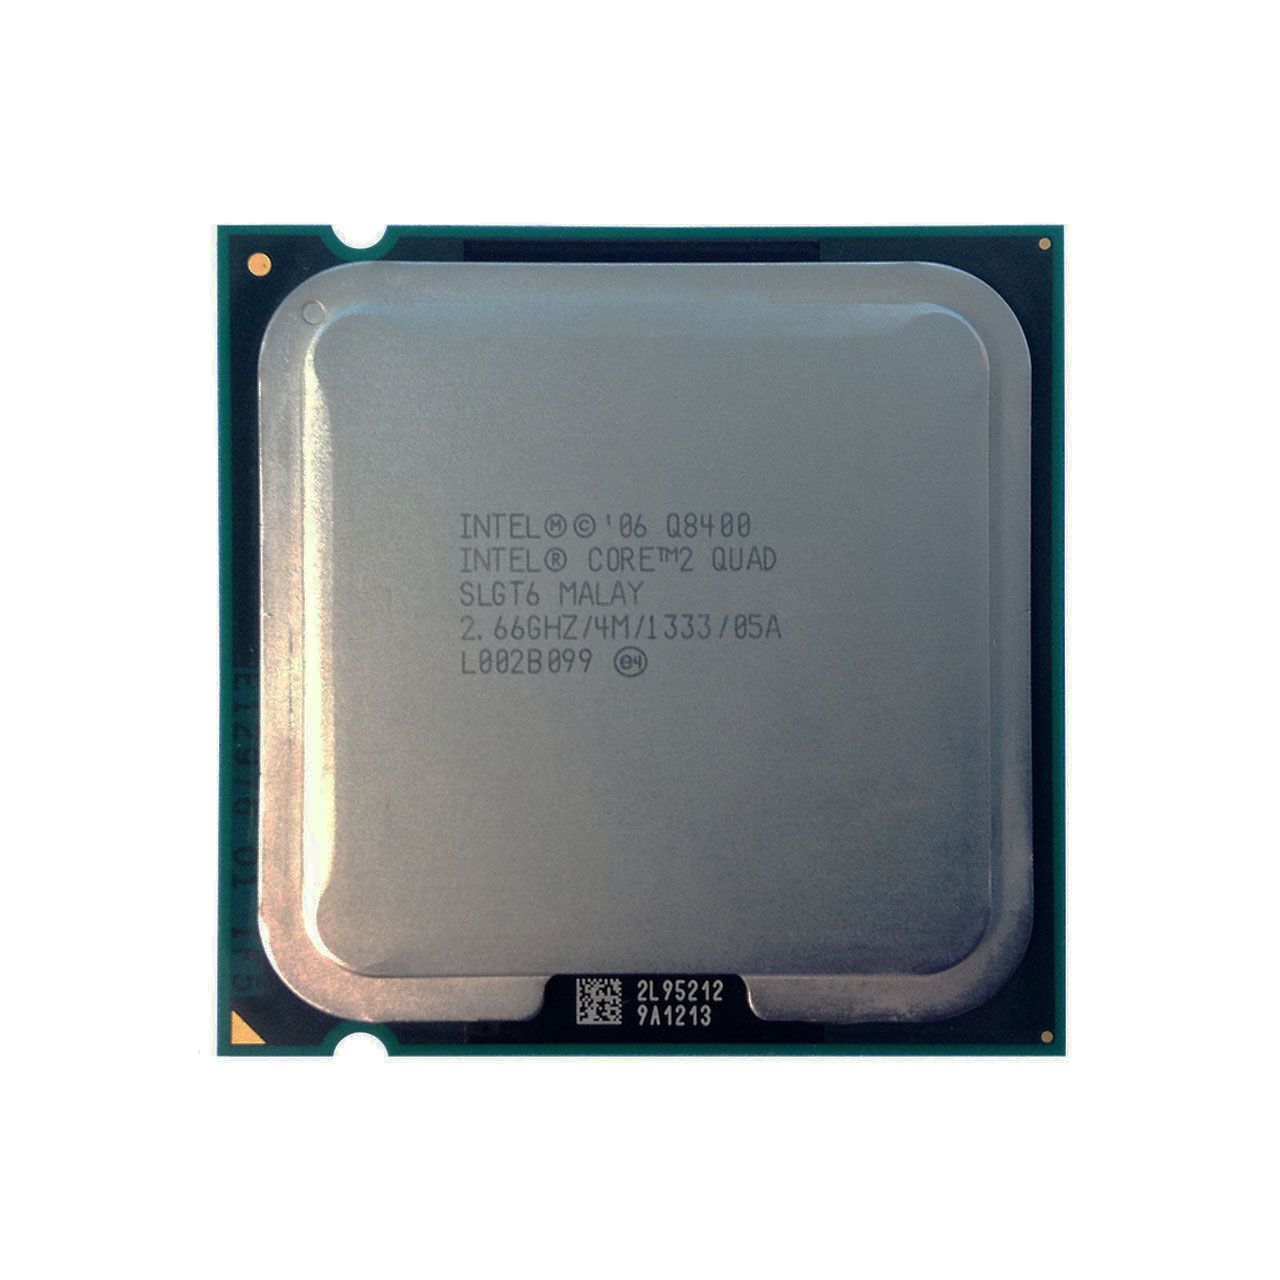 alledaags Samenstelling complicaties BX80580Q8400 Intel Processors - serverevolution.com